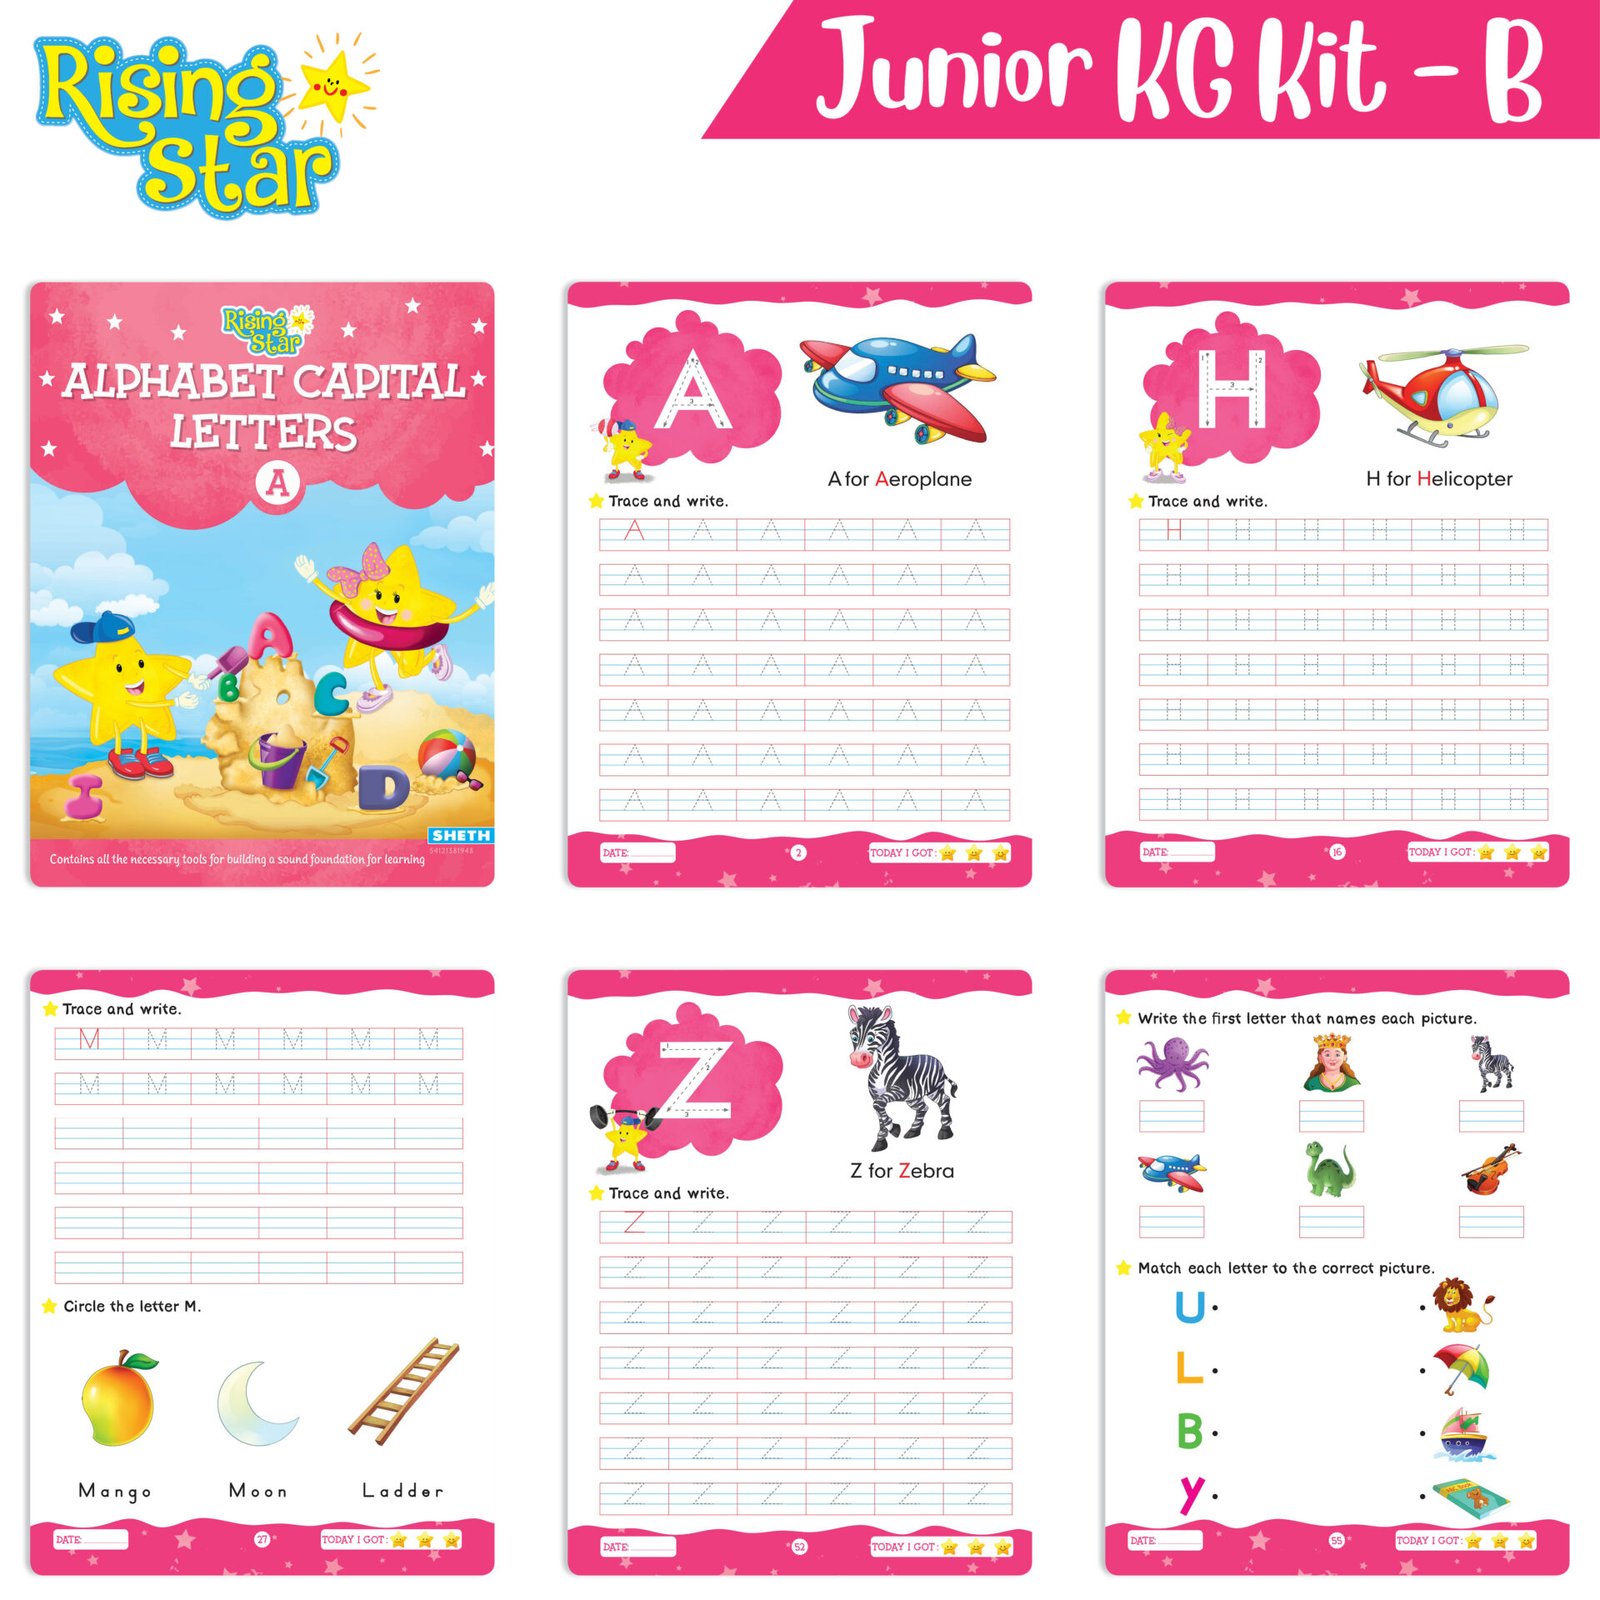 Rising Star Preschool Junior KG Kit B 01 Alphabet Capitals Letters A